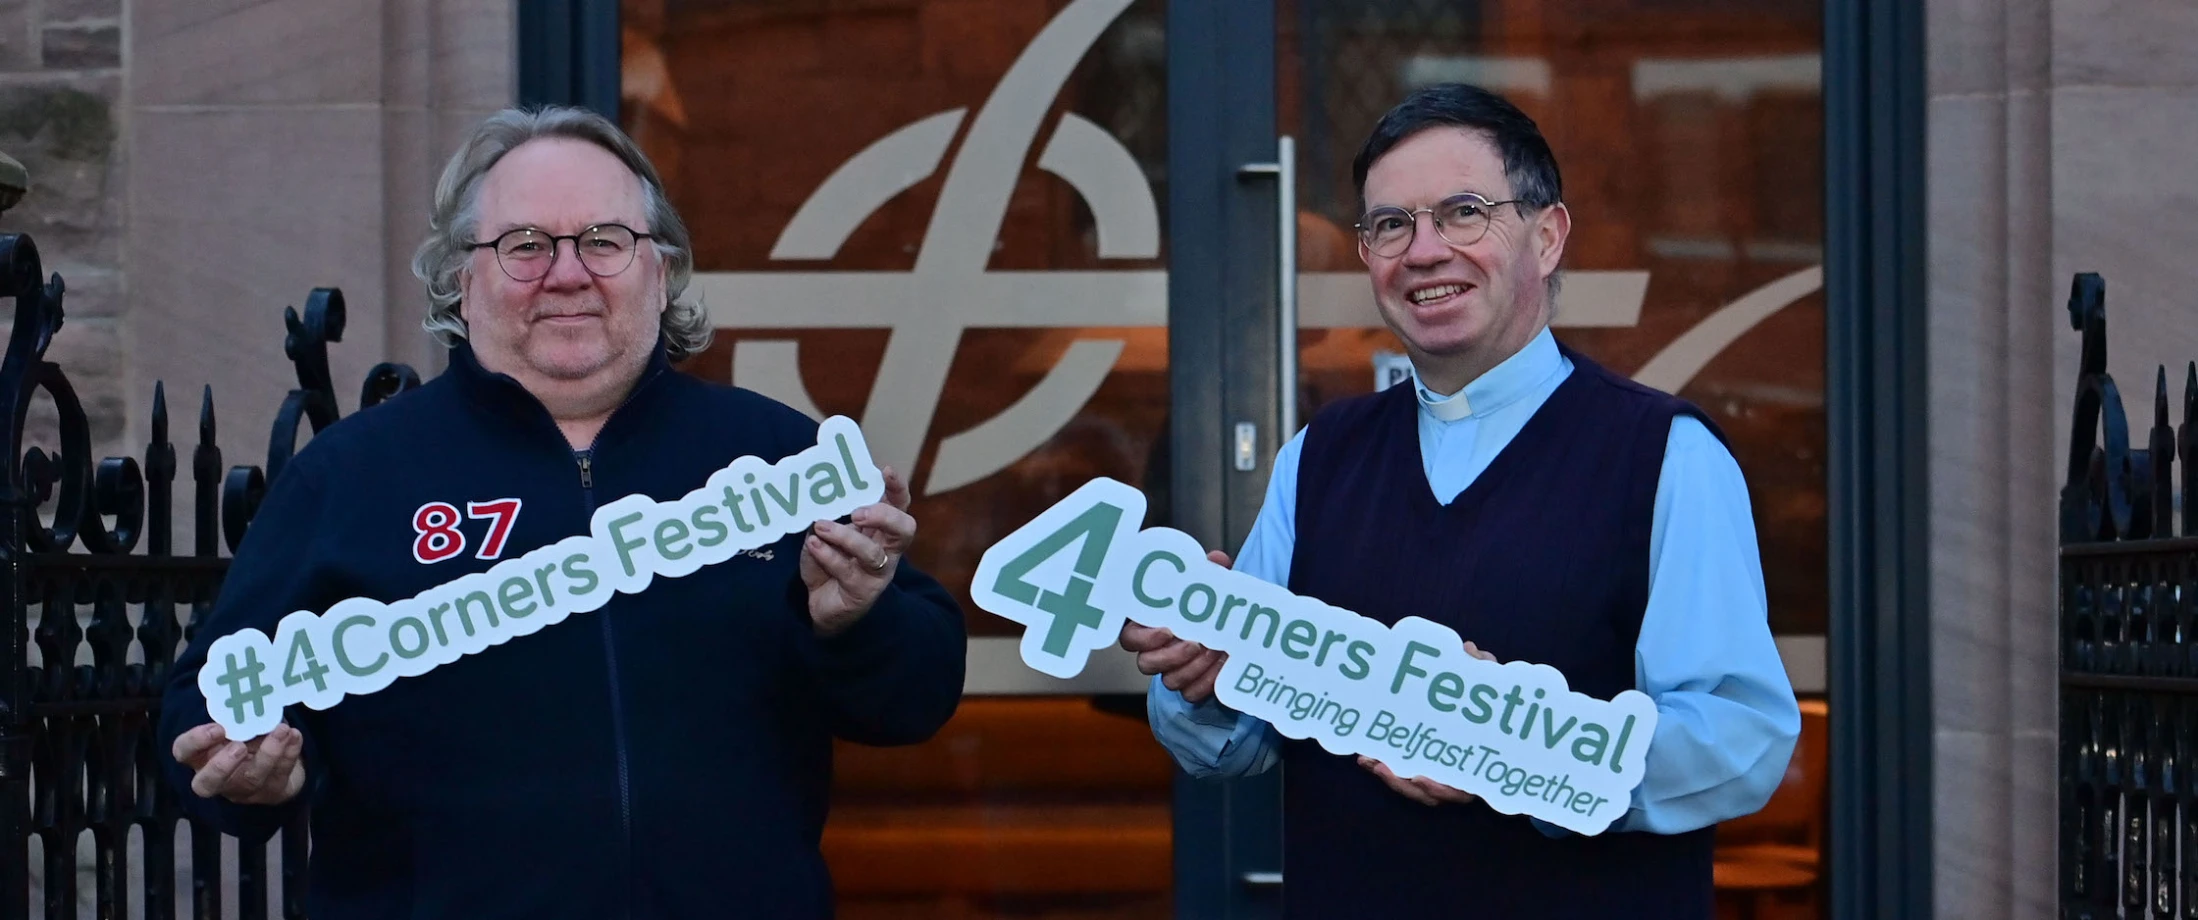 4 Corners Festival dares to dream